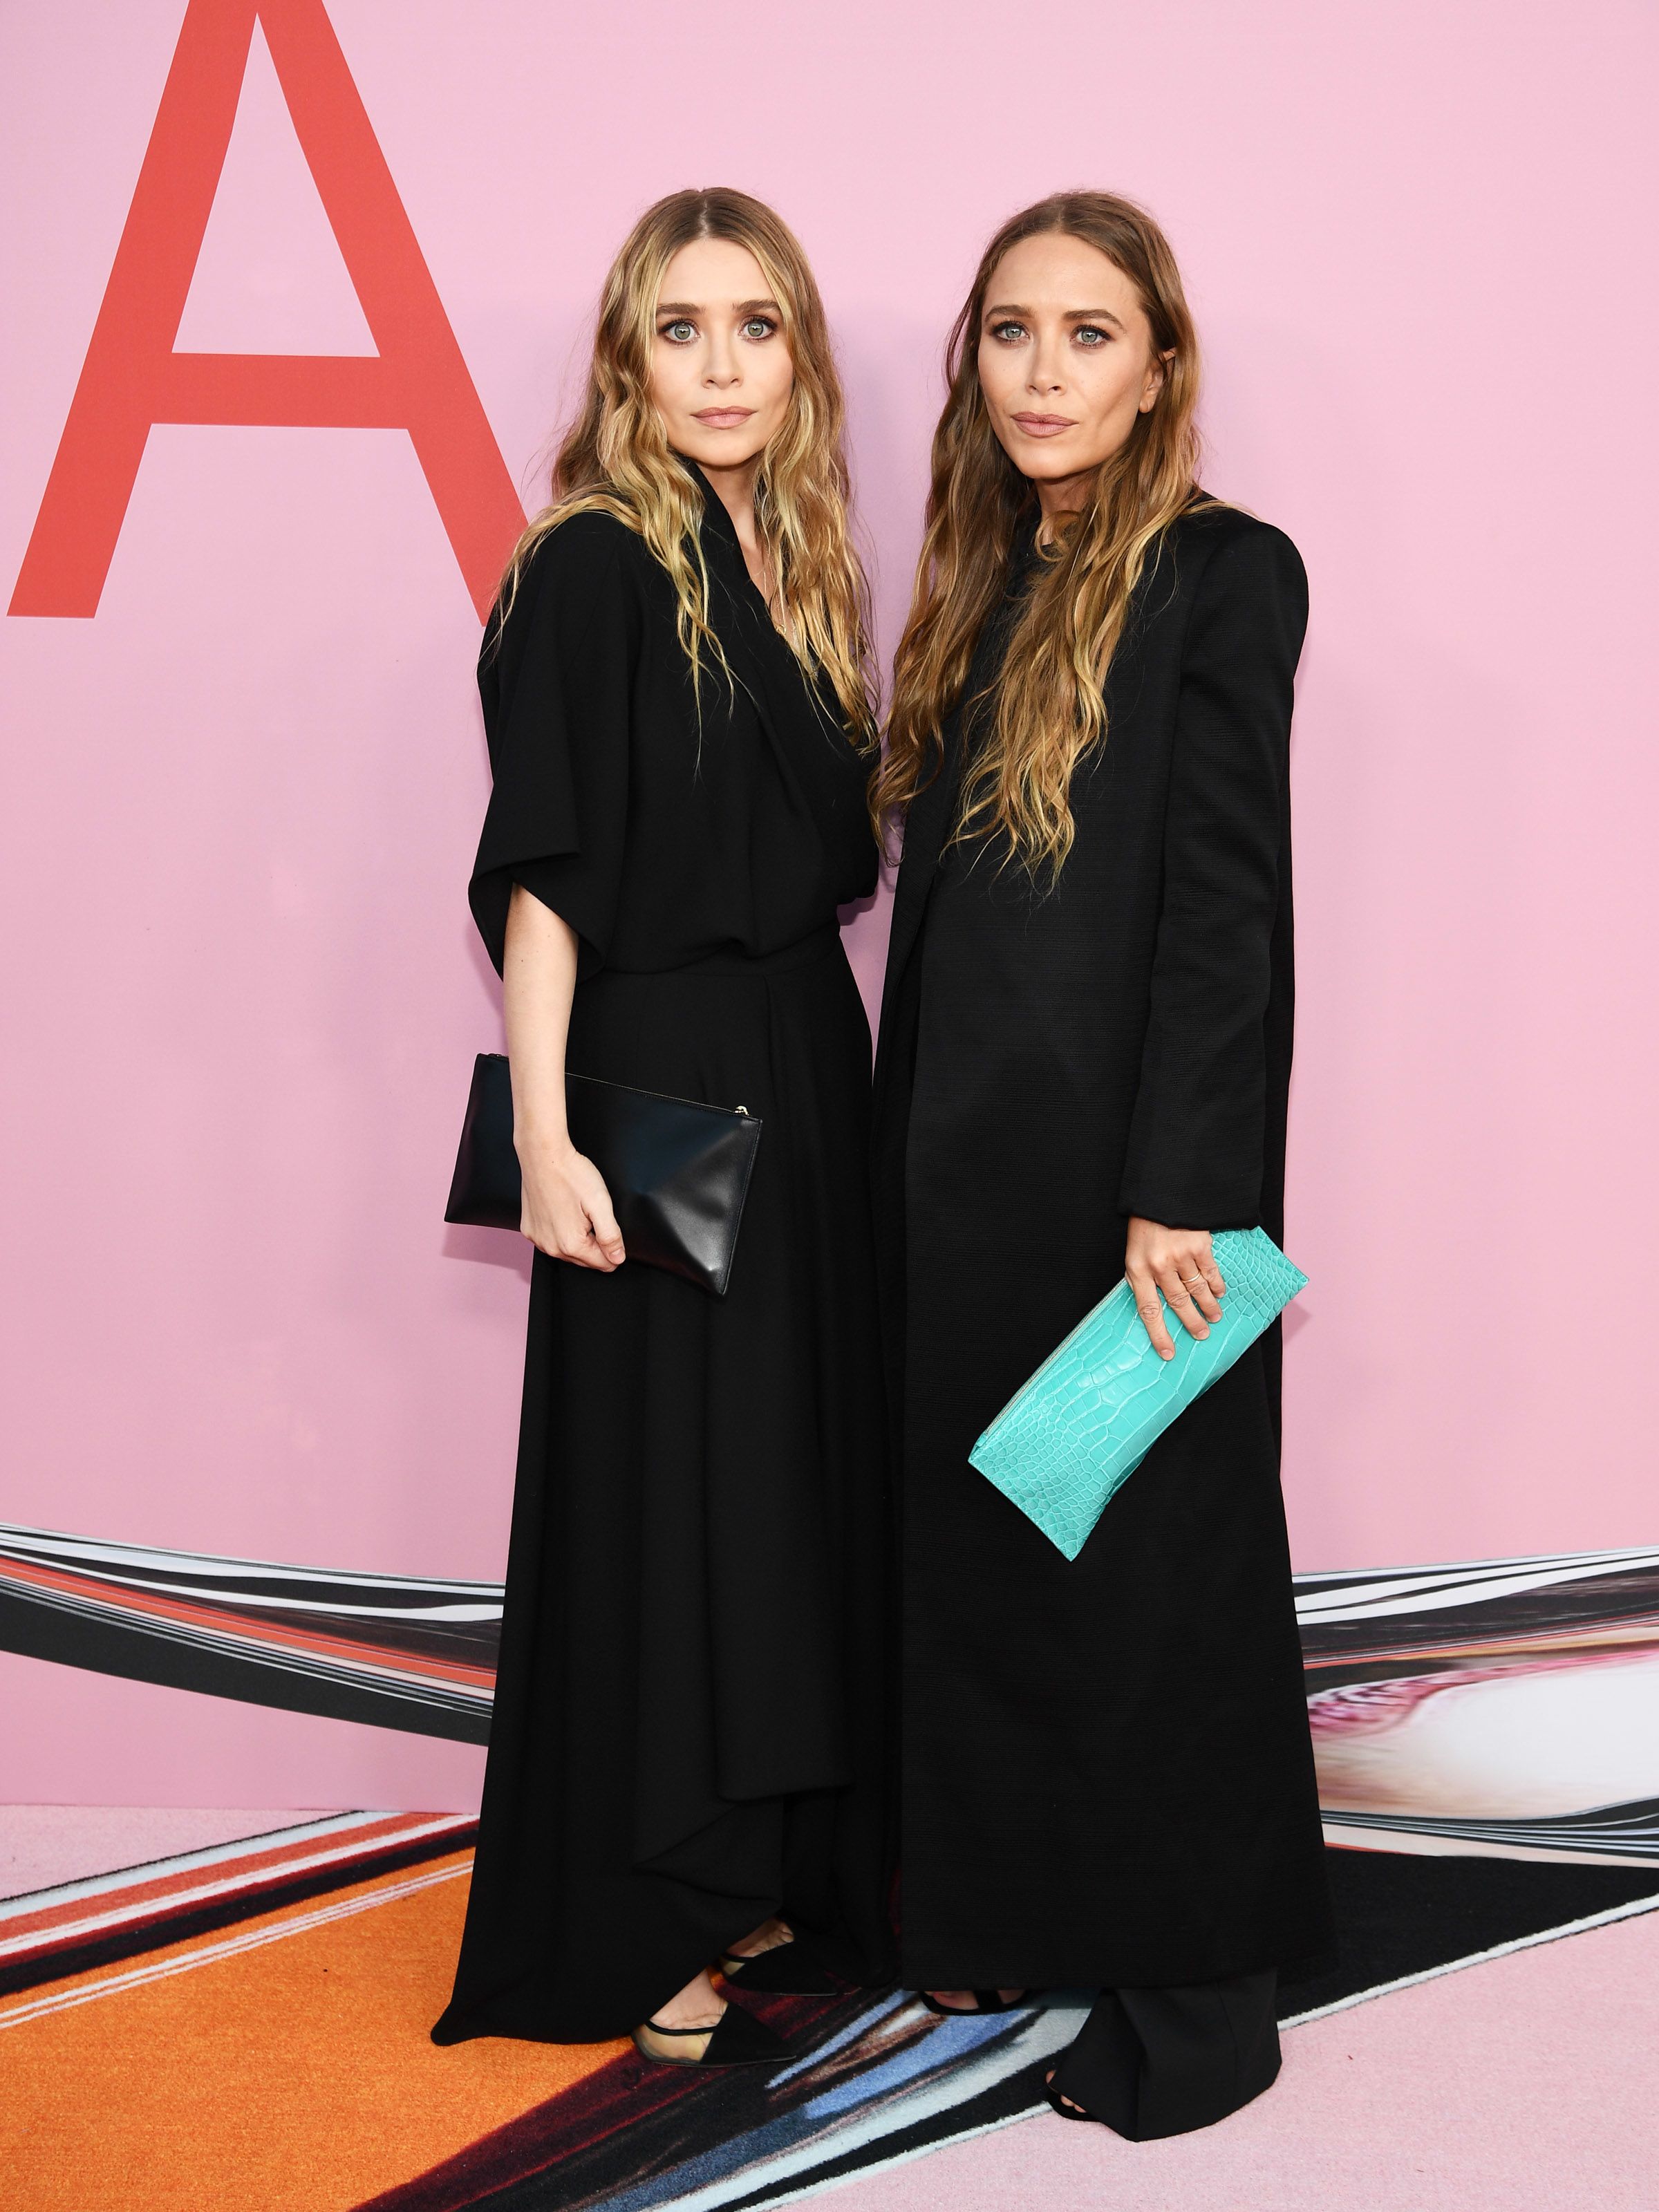 Mary-Kate and Ashley Olsen 'discreet' a reason CNN